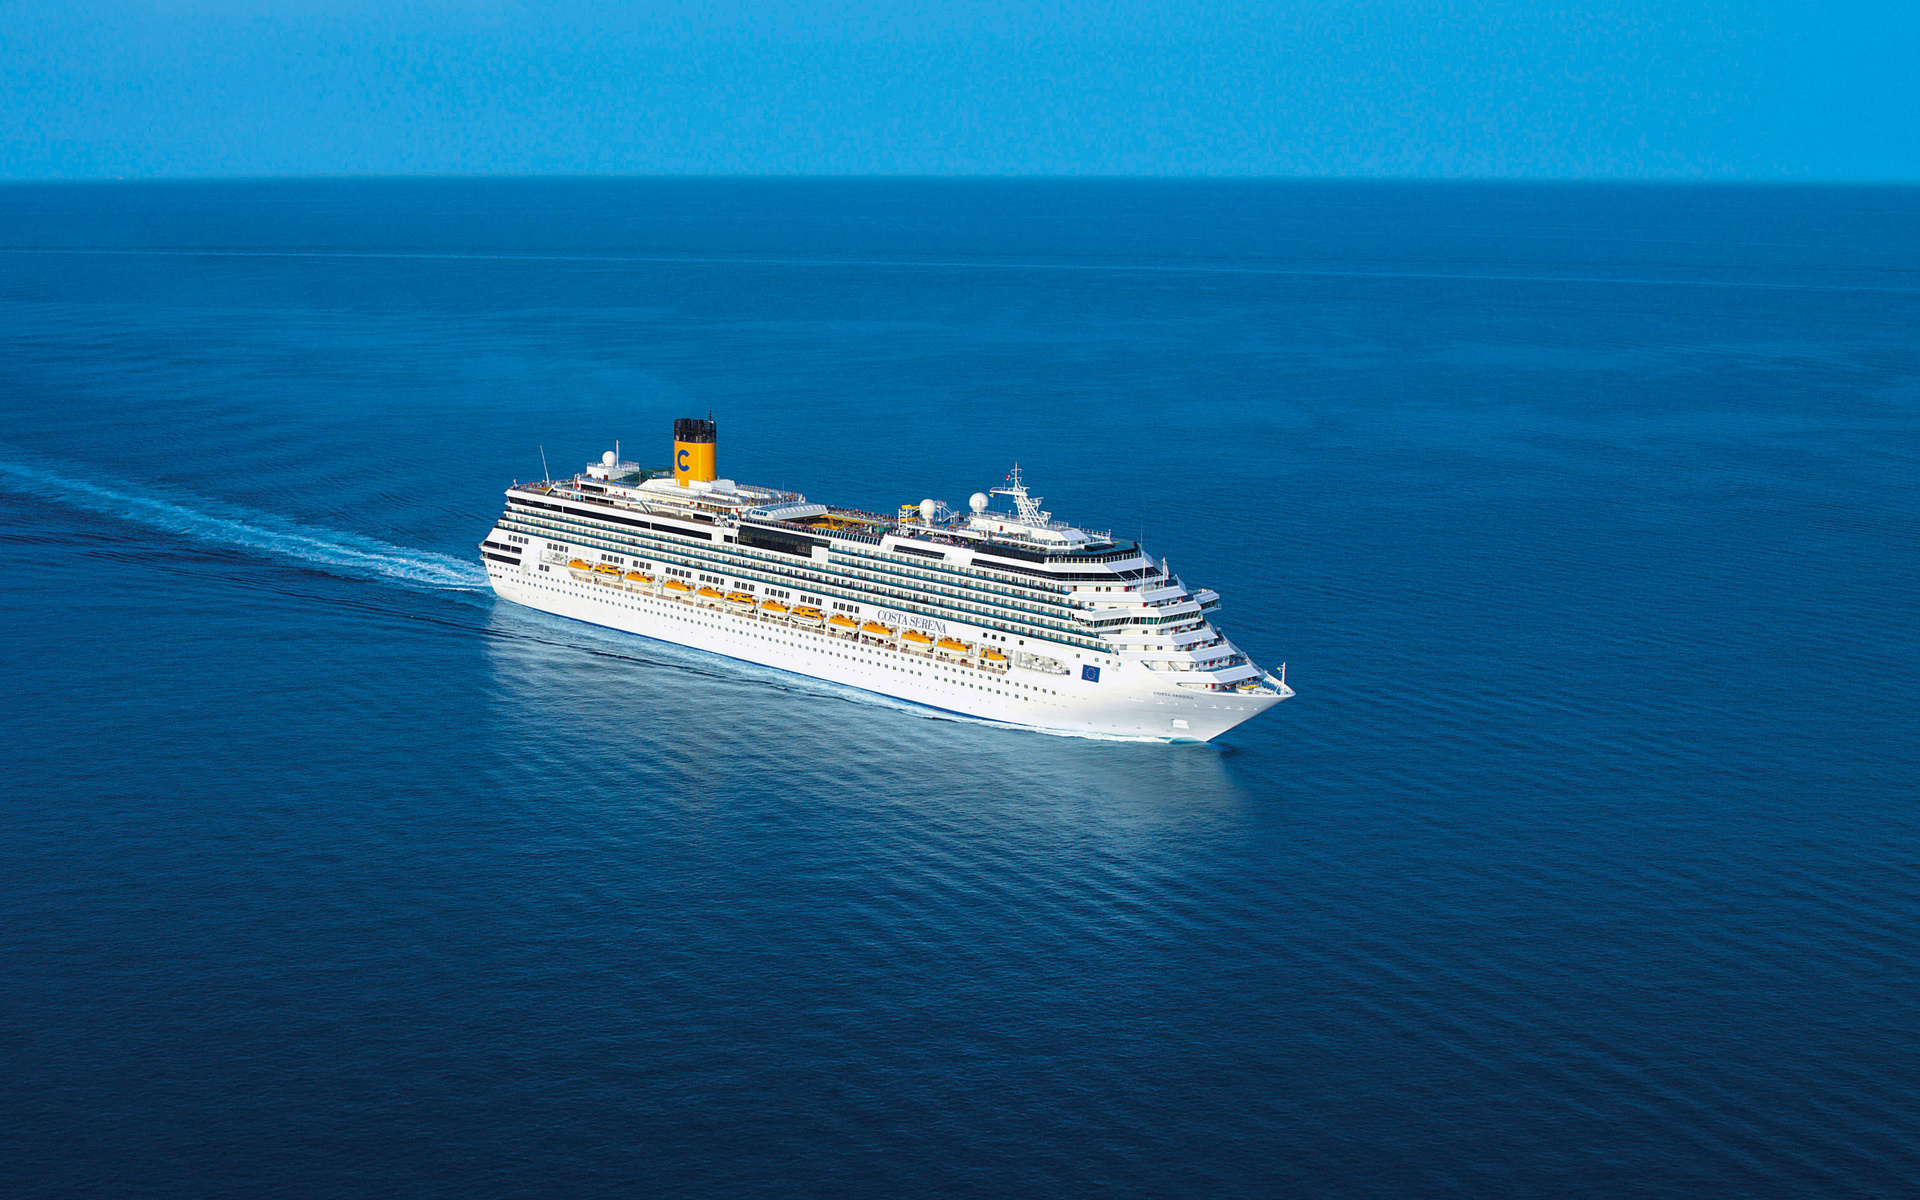 cruise wallpaper,cruise ship,water transportation,ship,passenger ship,vehicle